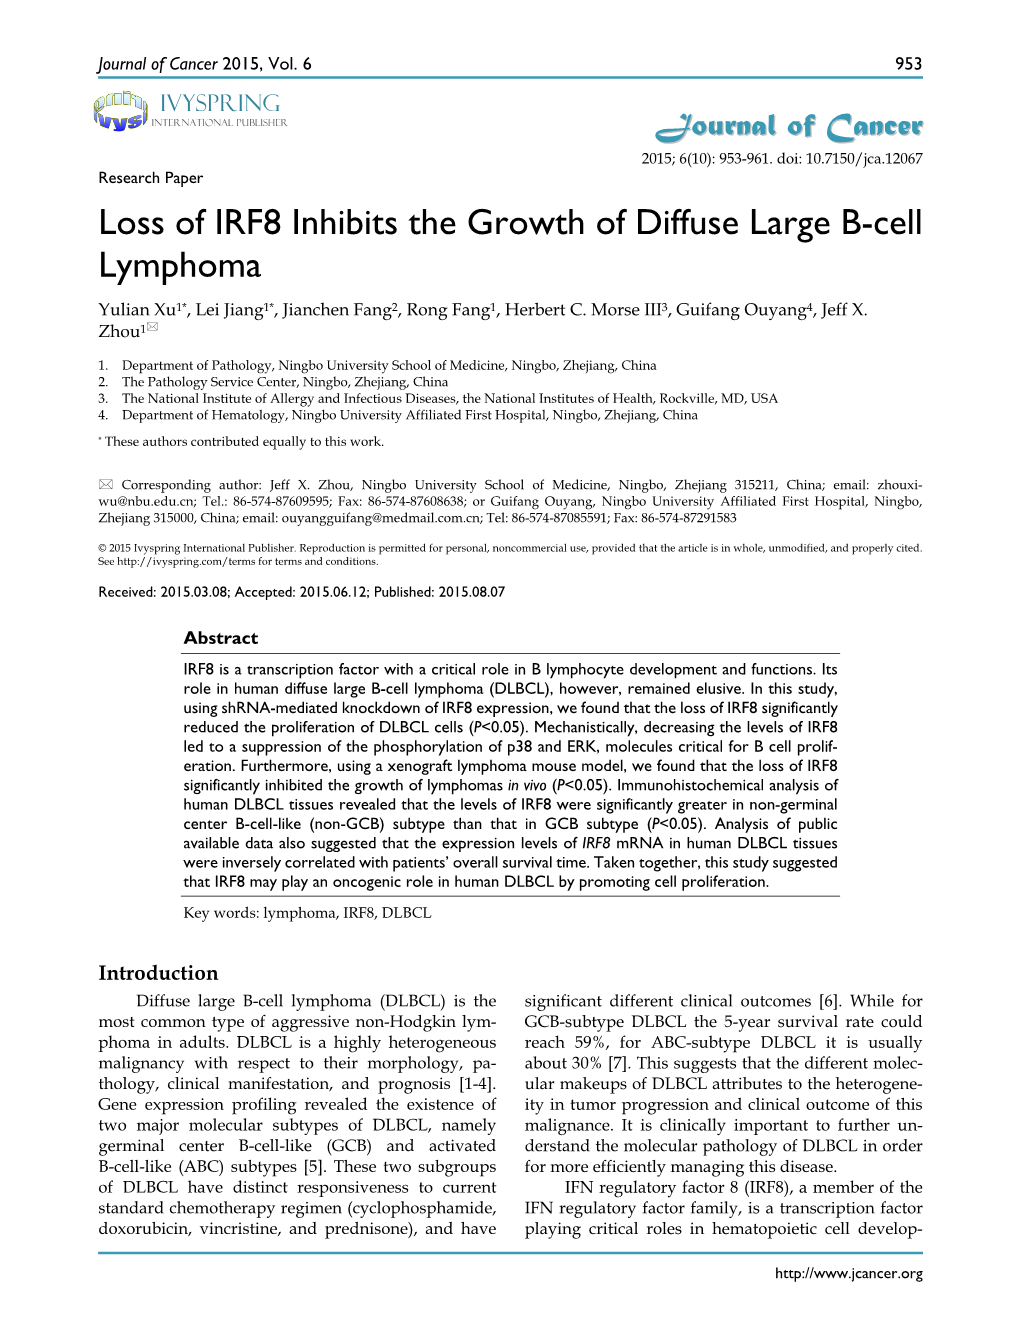 Loss of IRF8 Inhibits the Growth of Diffuse Large B-Cell Lymphoma Yulian Xu1*, Lei Jiang1*, Jianchen Fang2, Rong Fang1, Herbert C